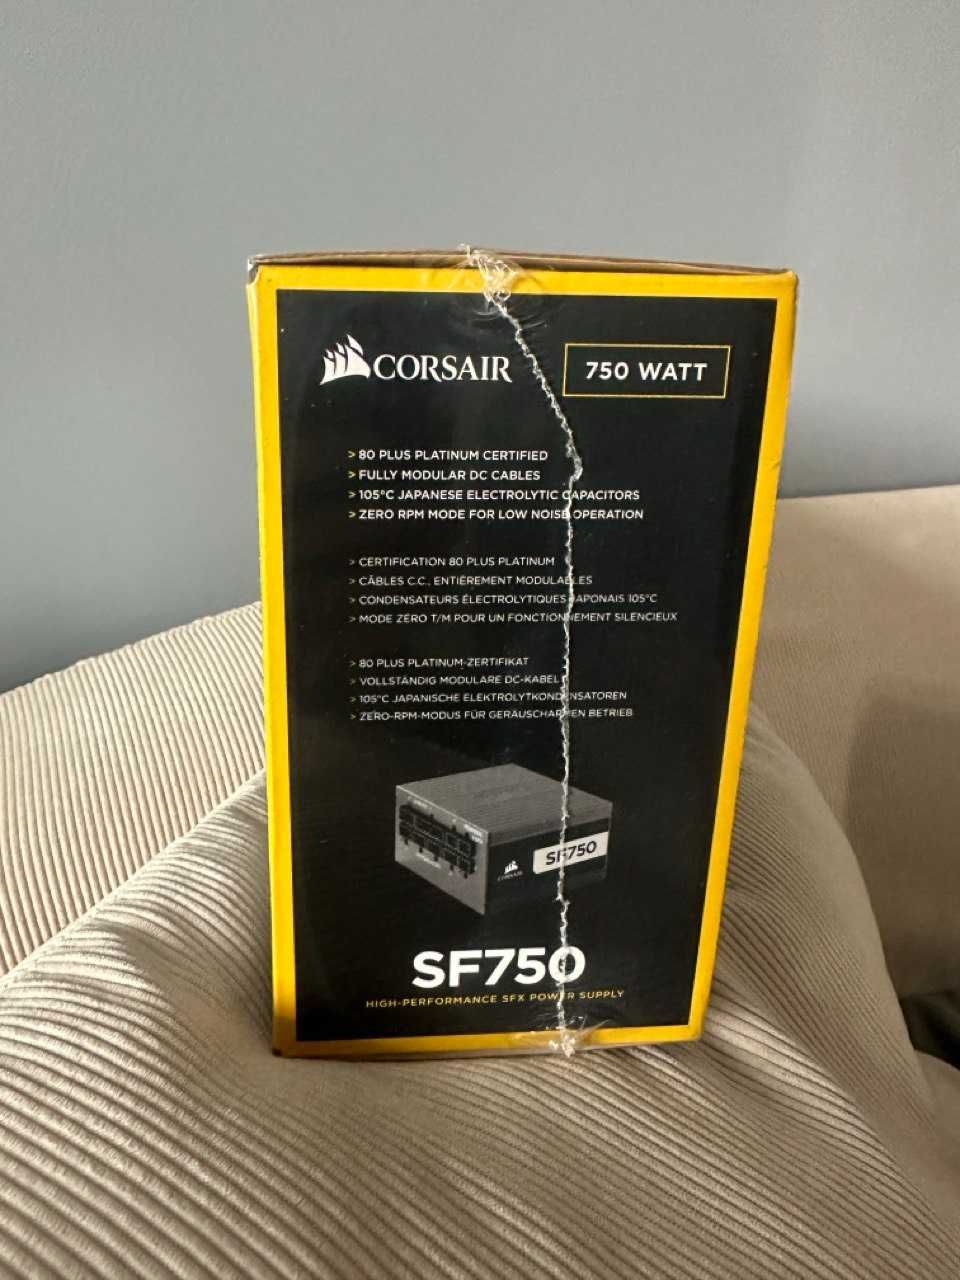 SFX блок питания Corsair SF 750 Platinum (НОВЫЙ)